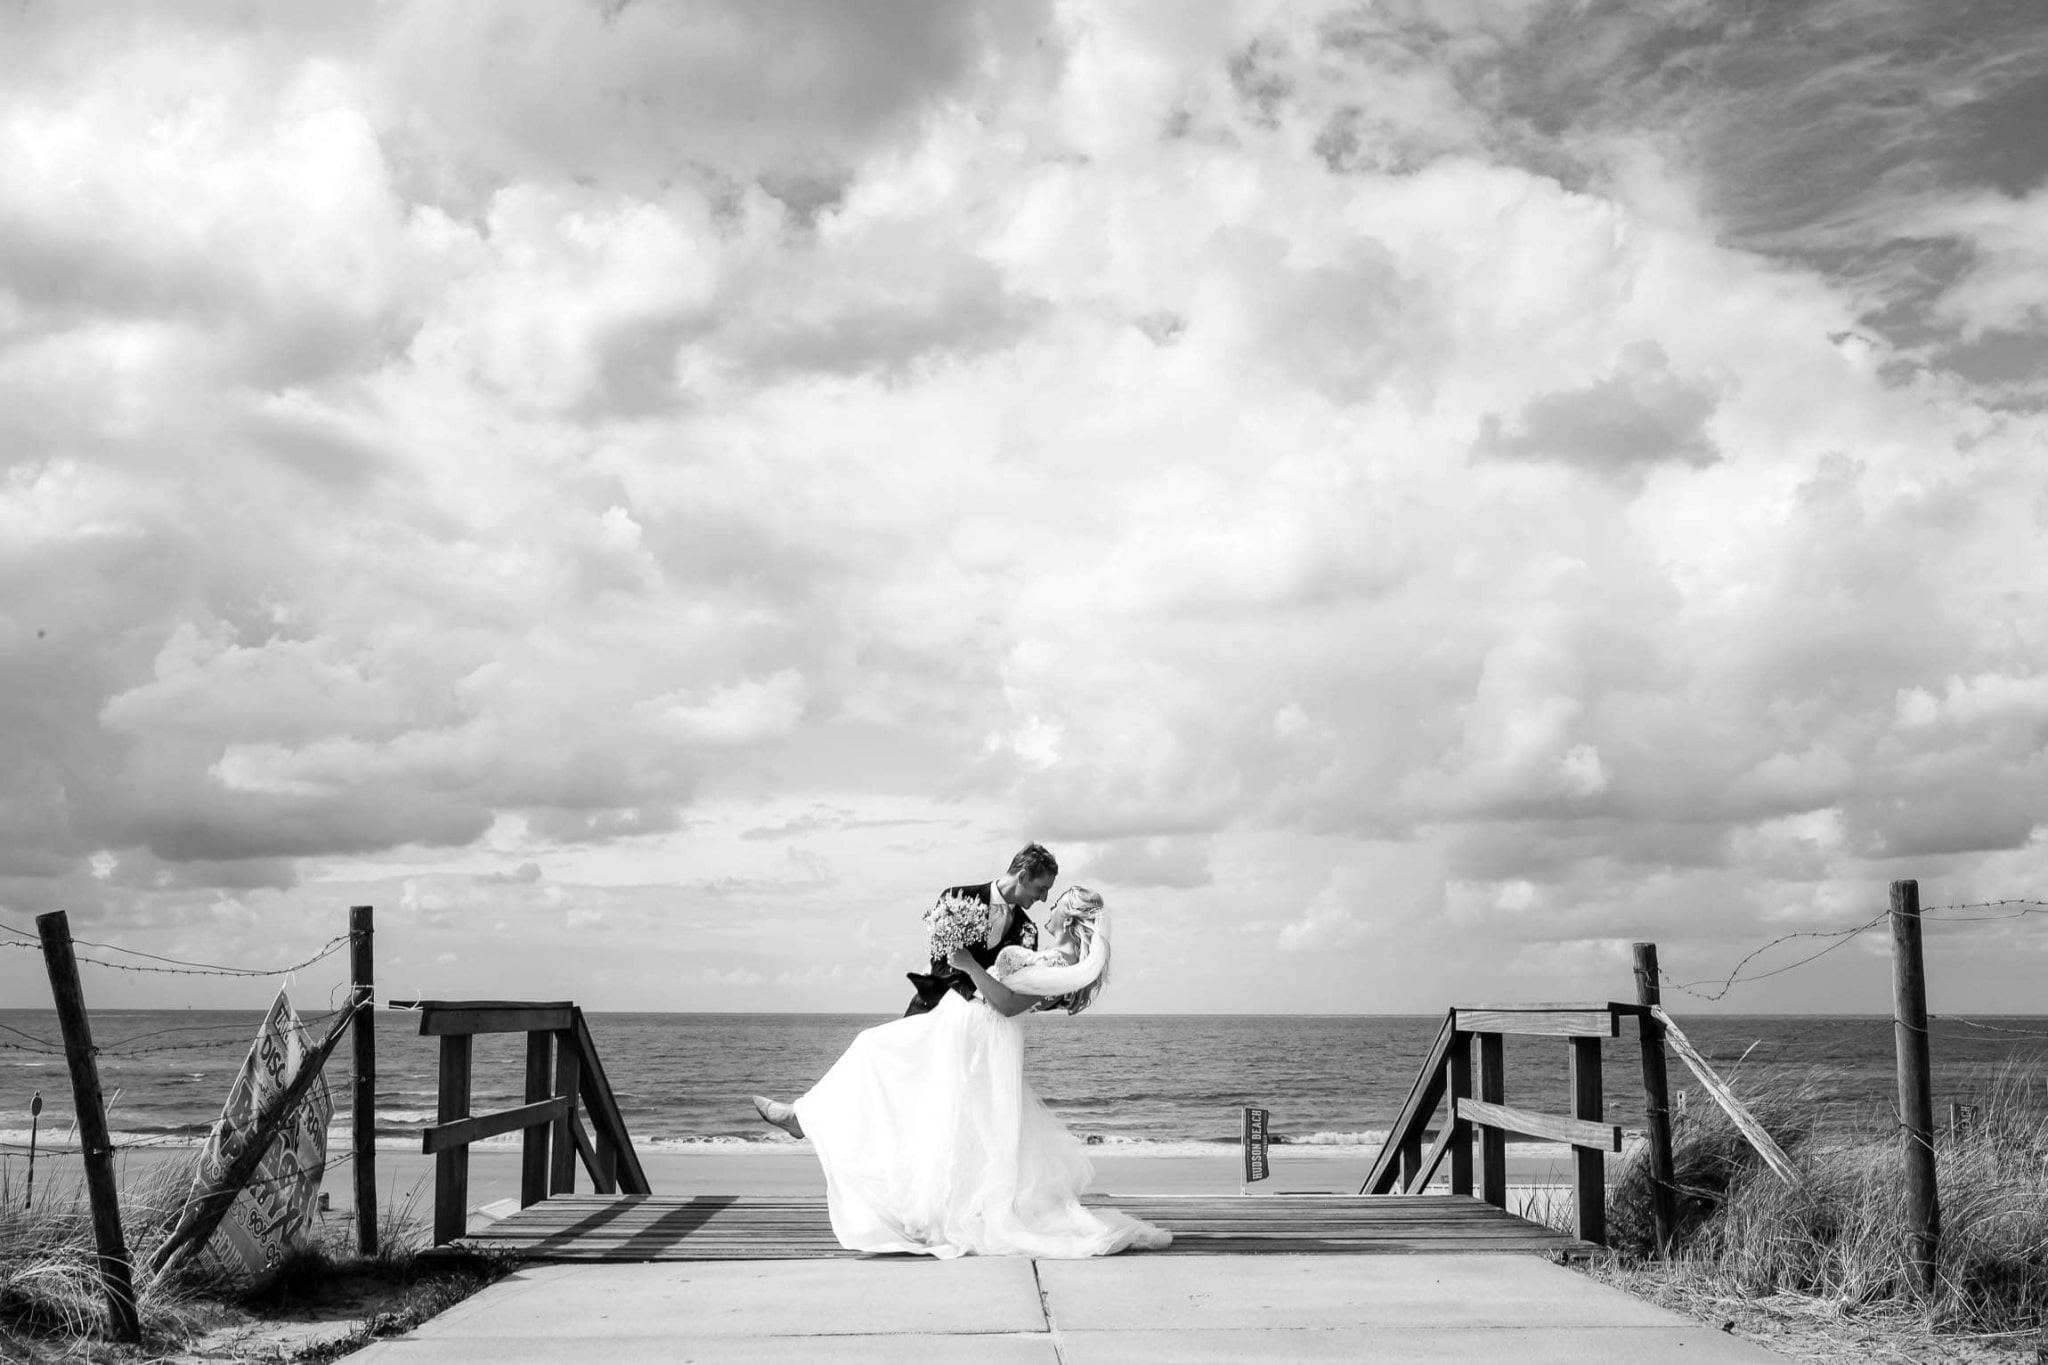 A bride and groom kiss on a boardwalk near the ocean.